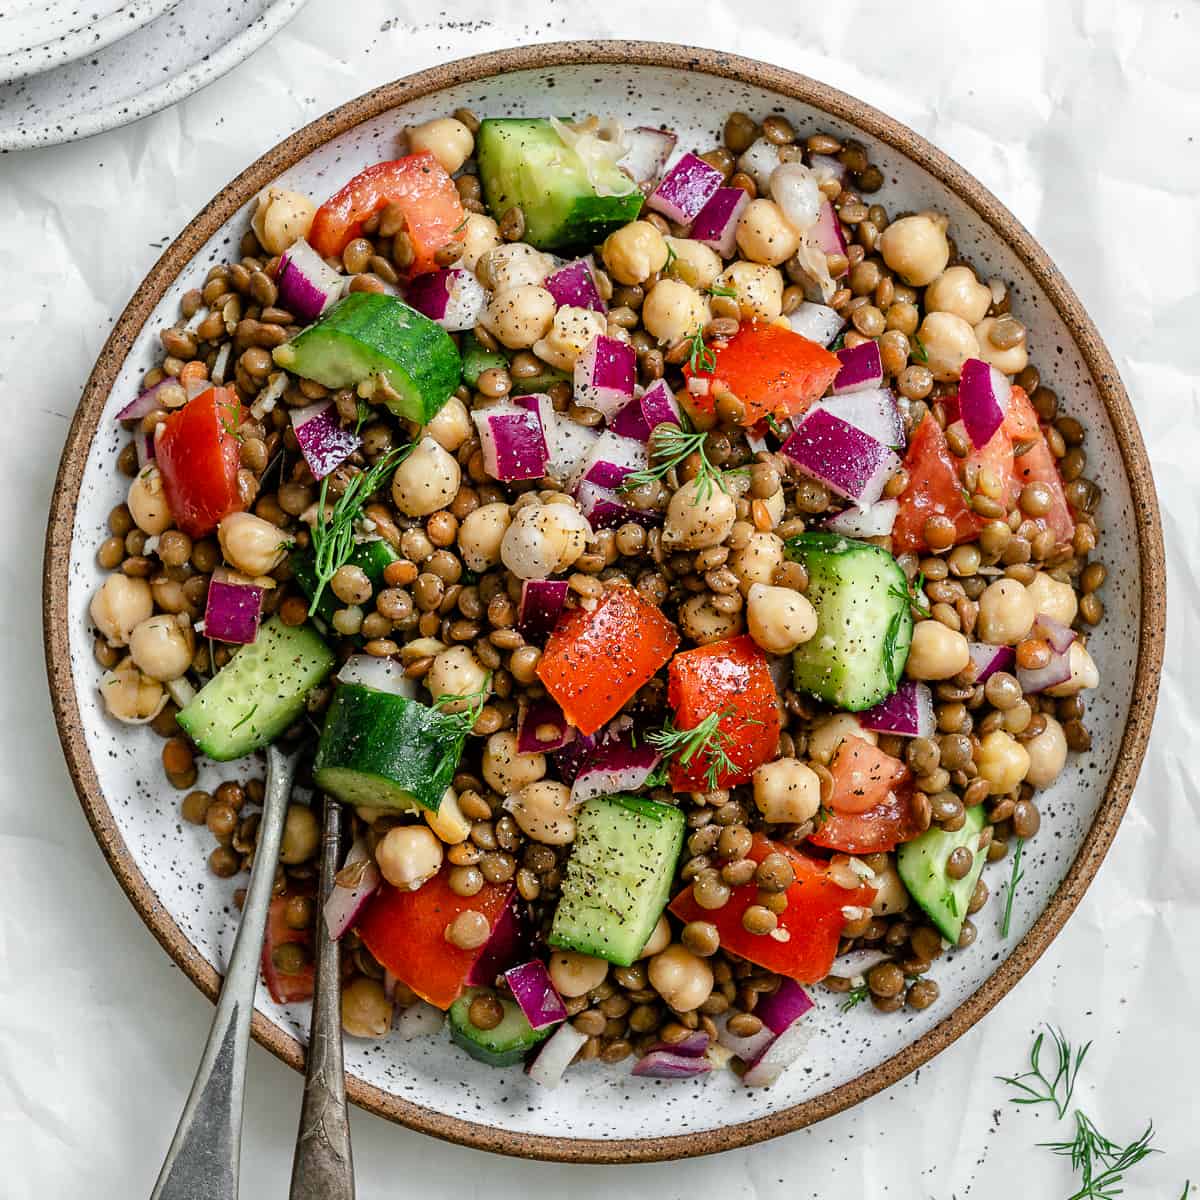 Lentils and Mediterranean salads